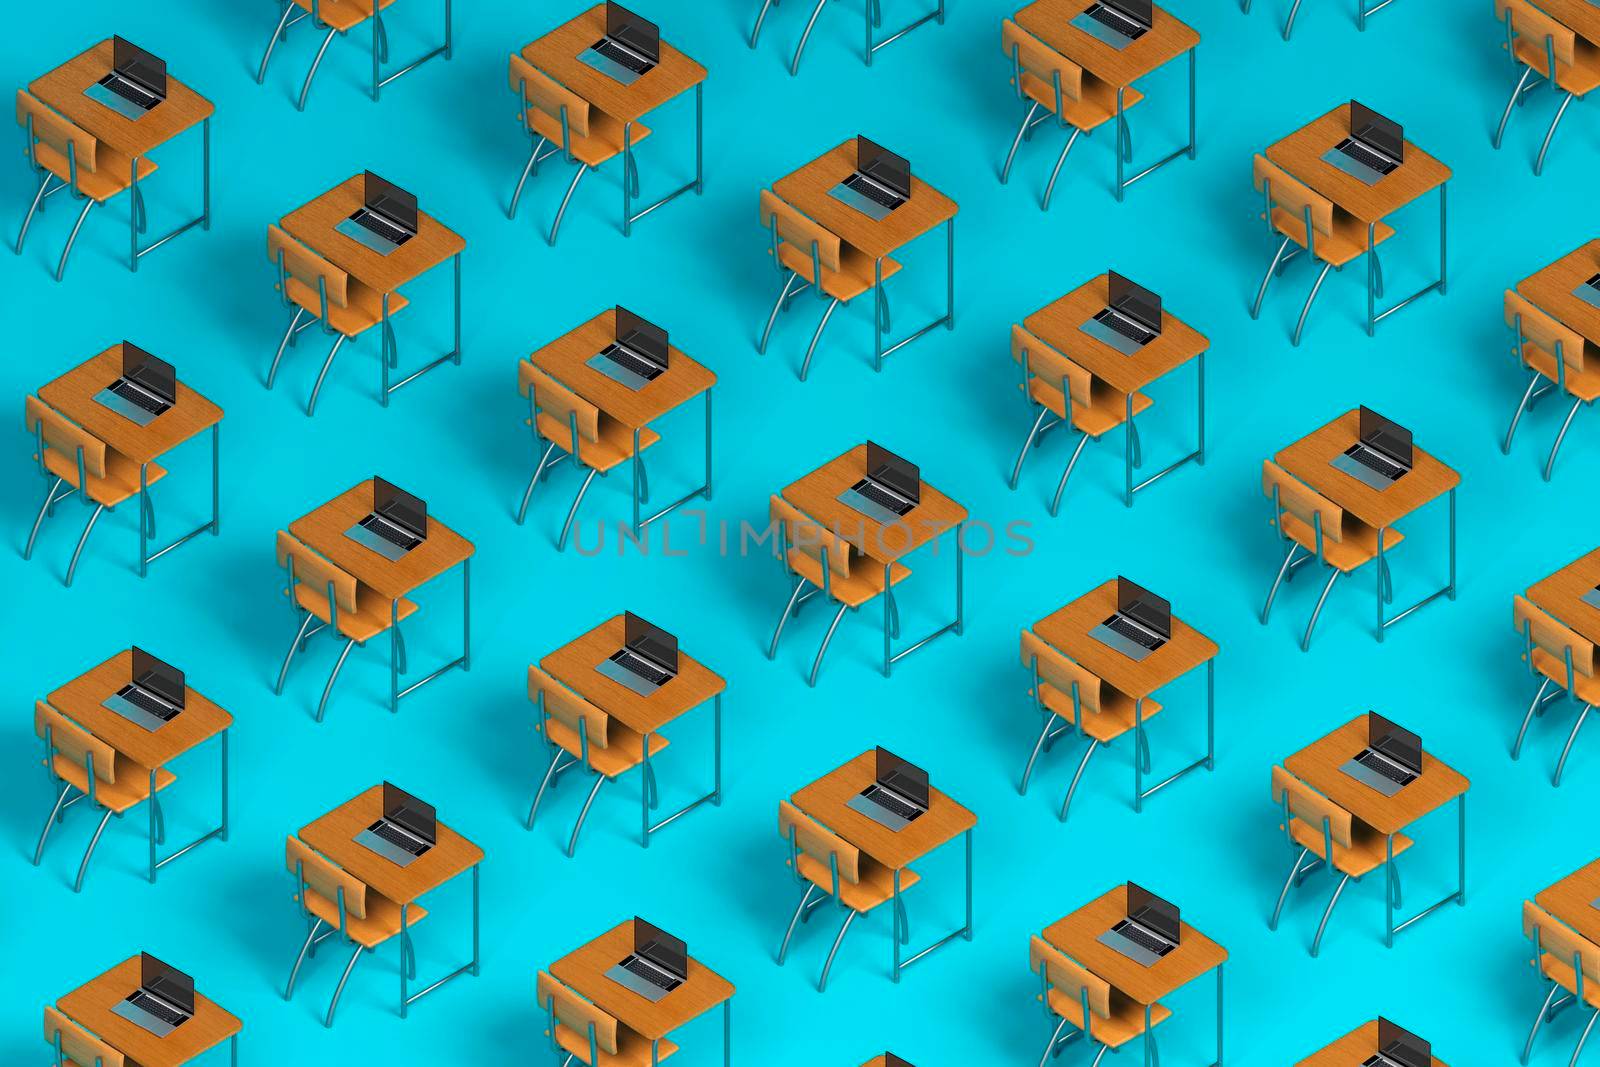 large pattern of School desks, books and laptops. 3d illustration by raferto1973